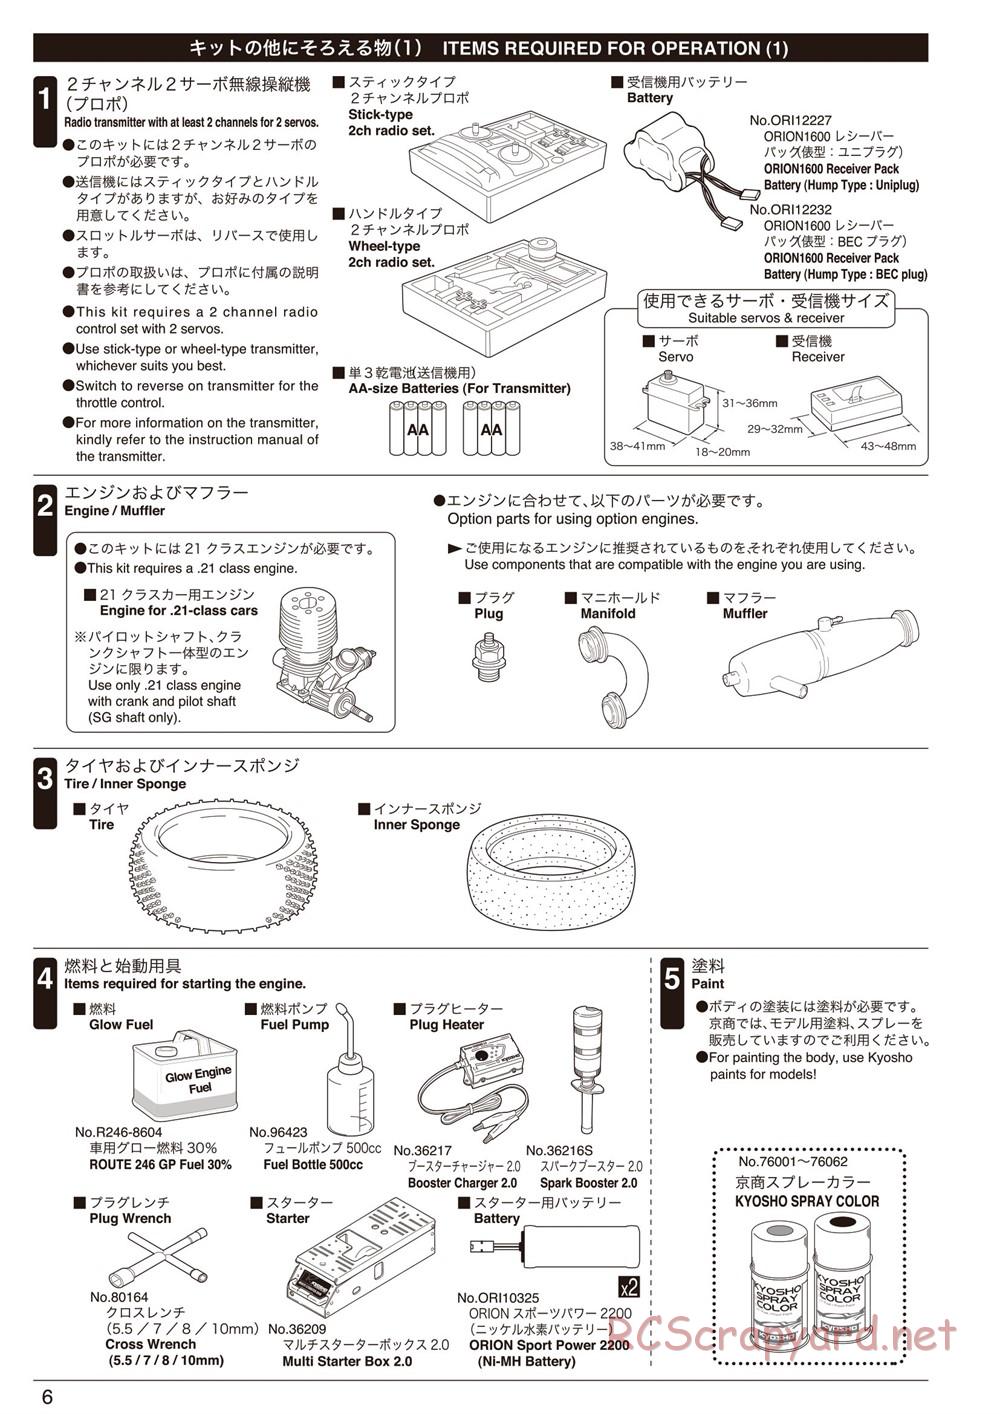 Kyosho - Inferno MP9 TKI2 - Manual - Page 6